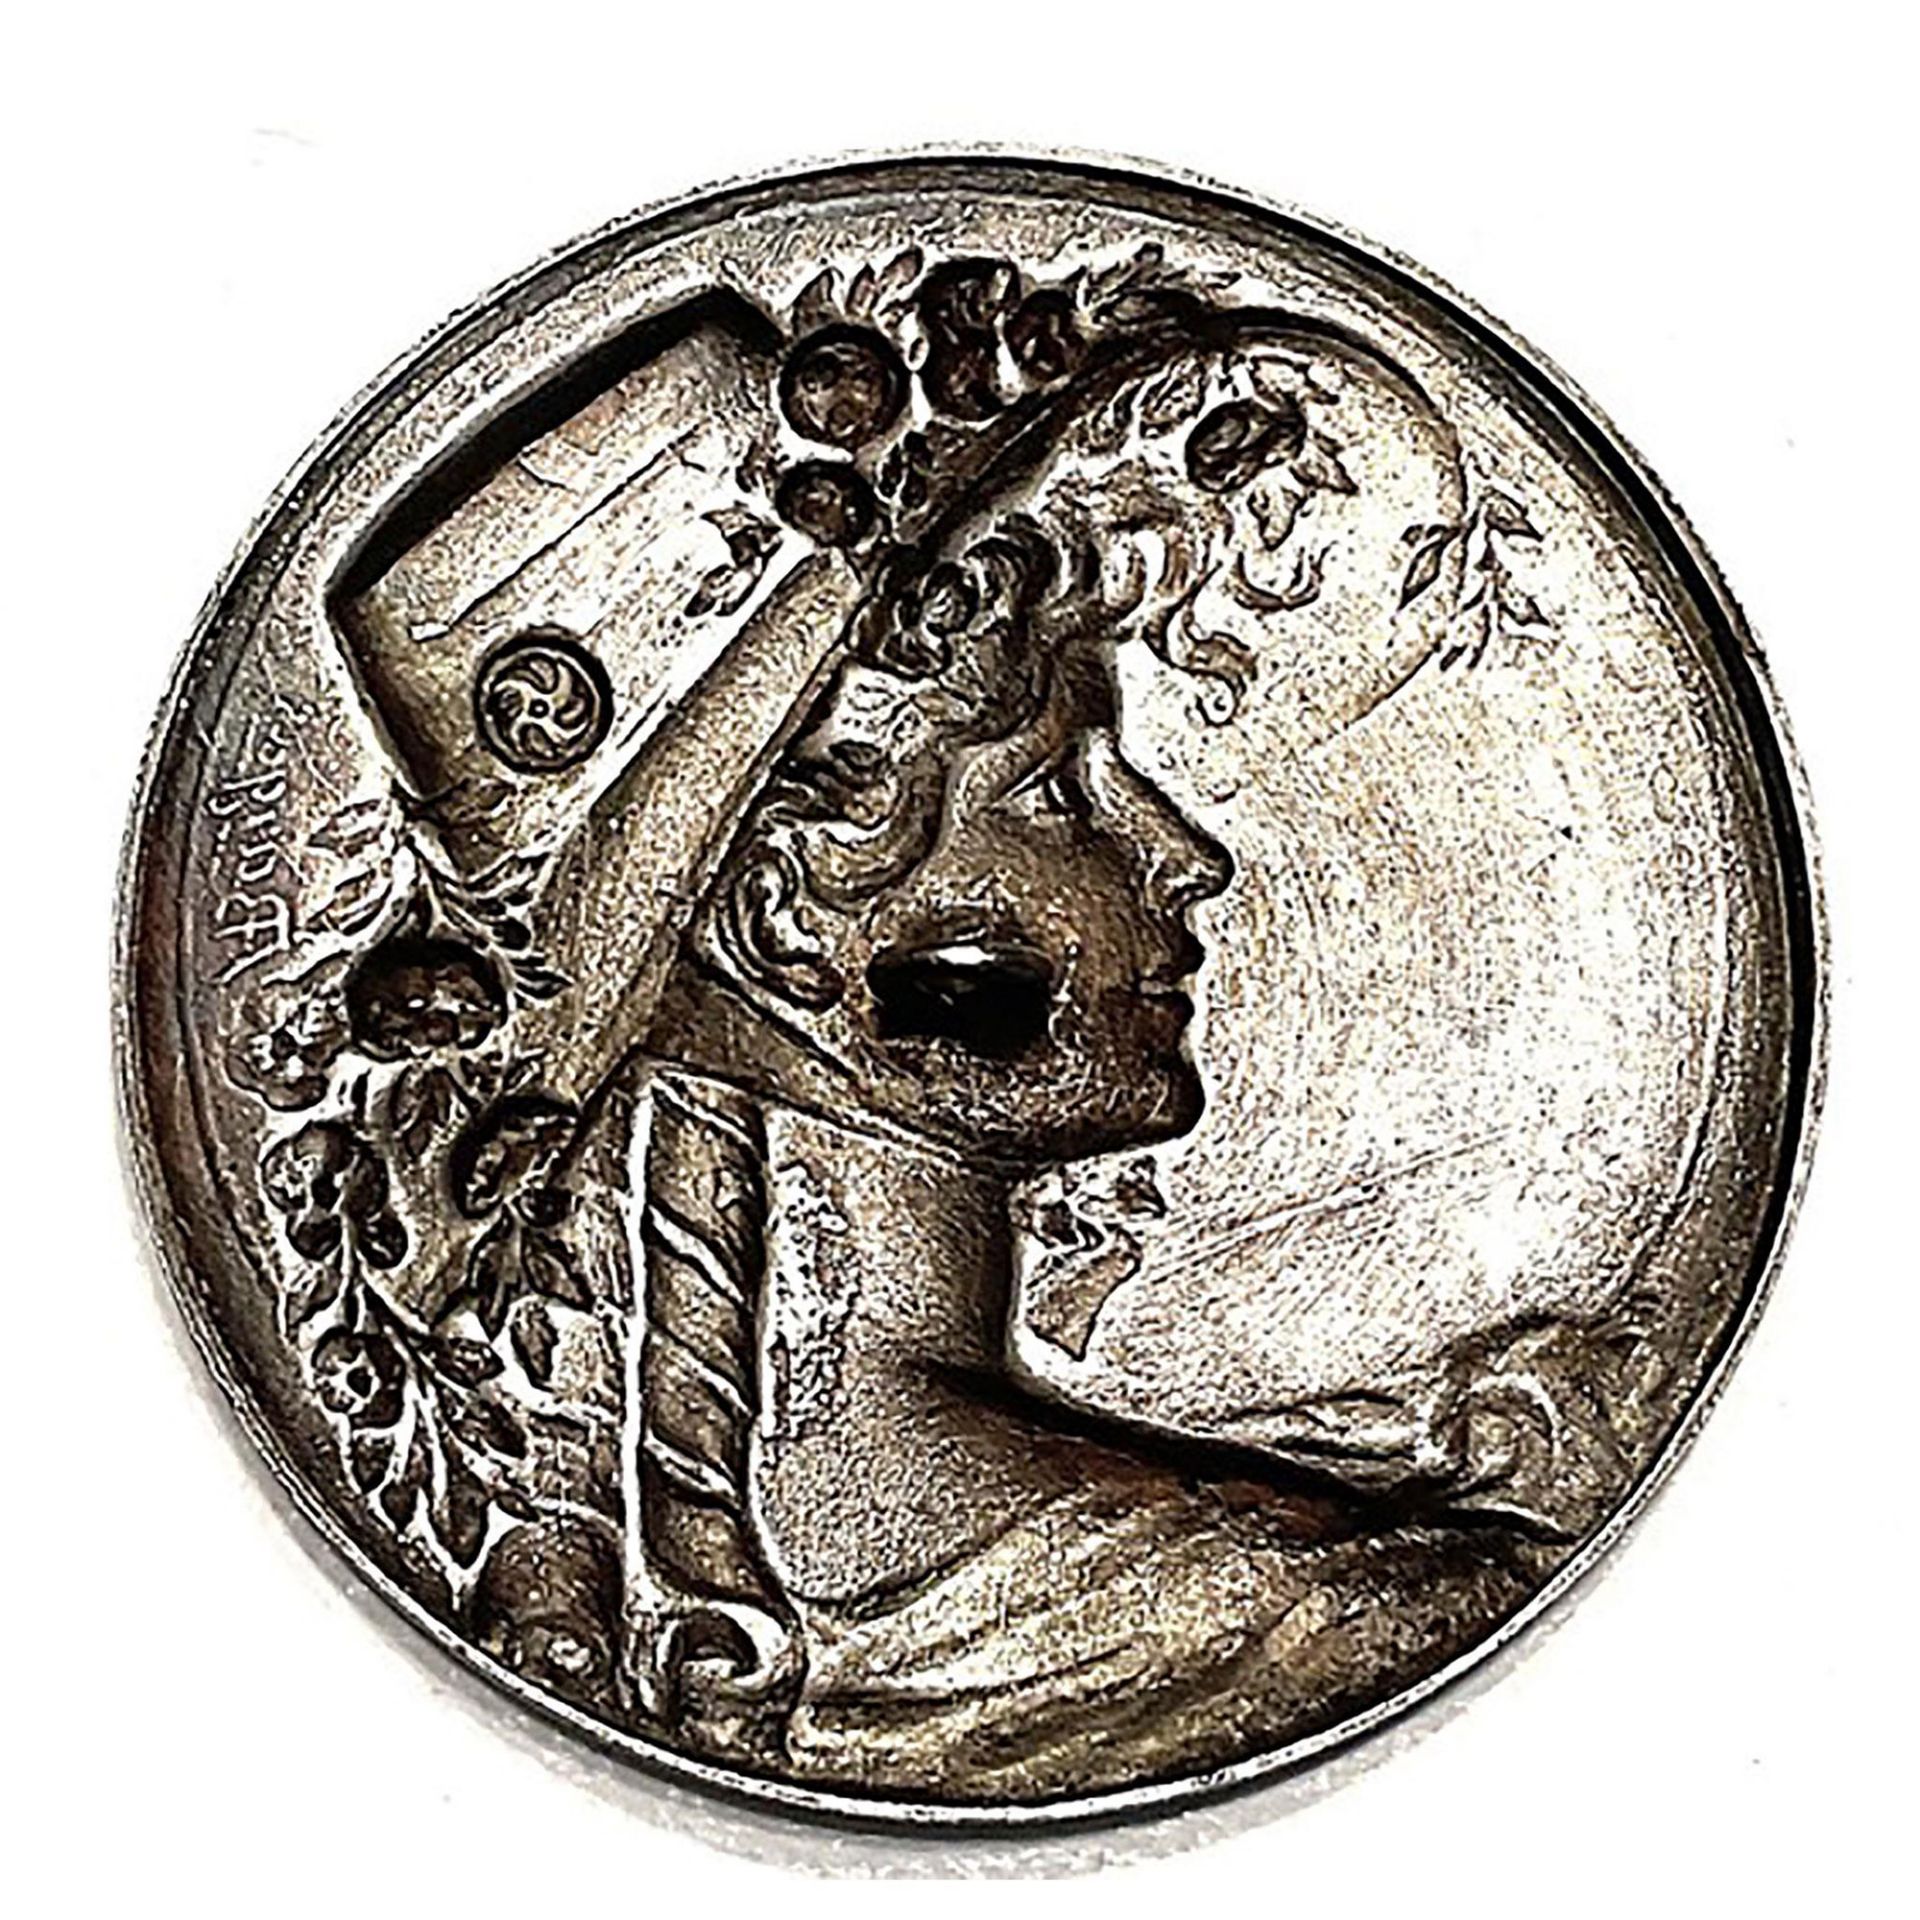 A division one relief Art Nouveau Lady button - Image 3 of 3